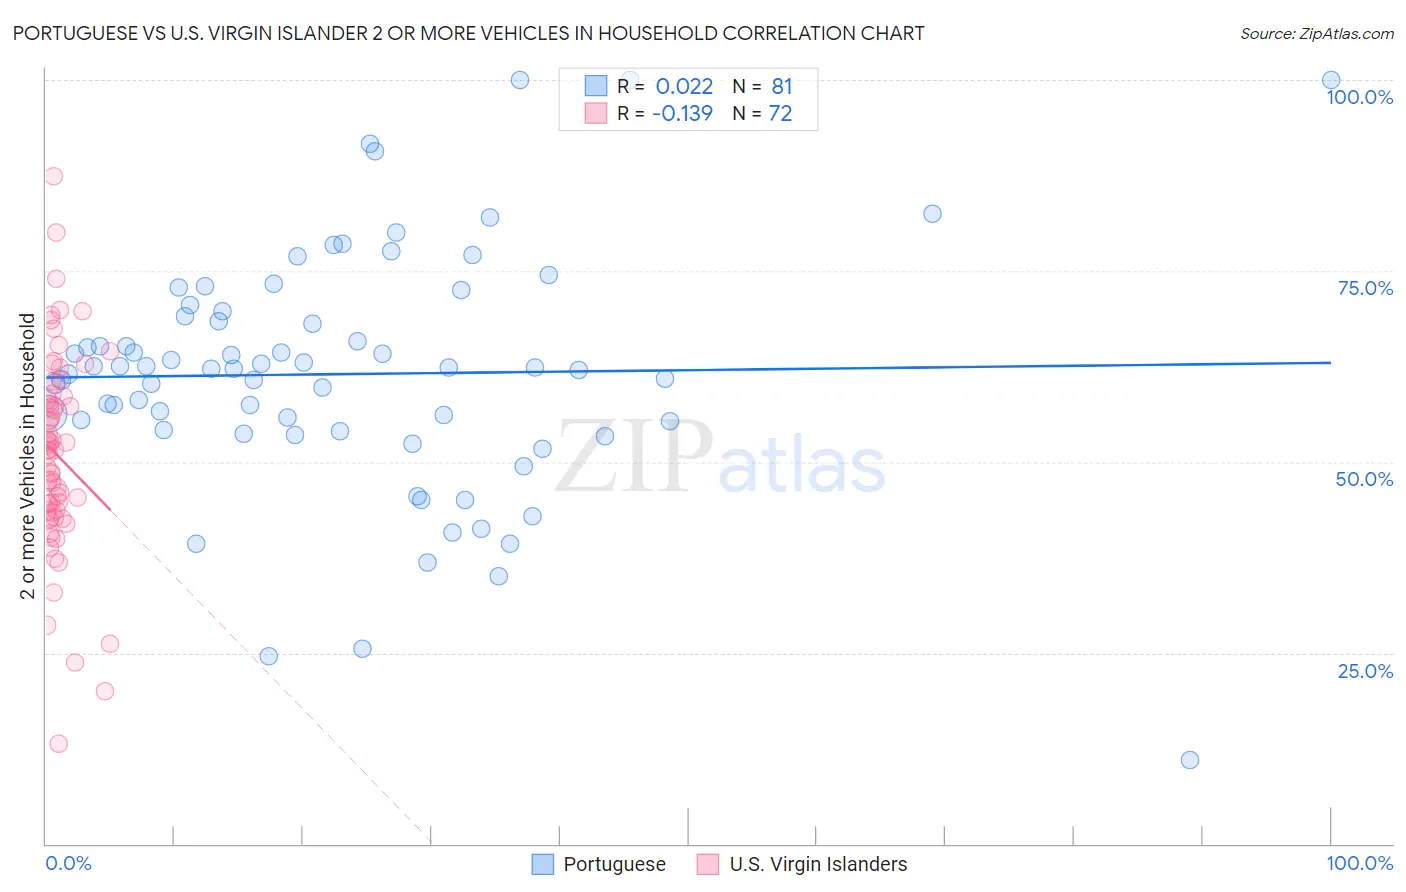 Portuguese vs U.S. Virgin Islander 2 or more Vehicles in Household